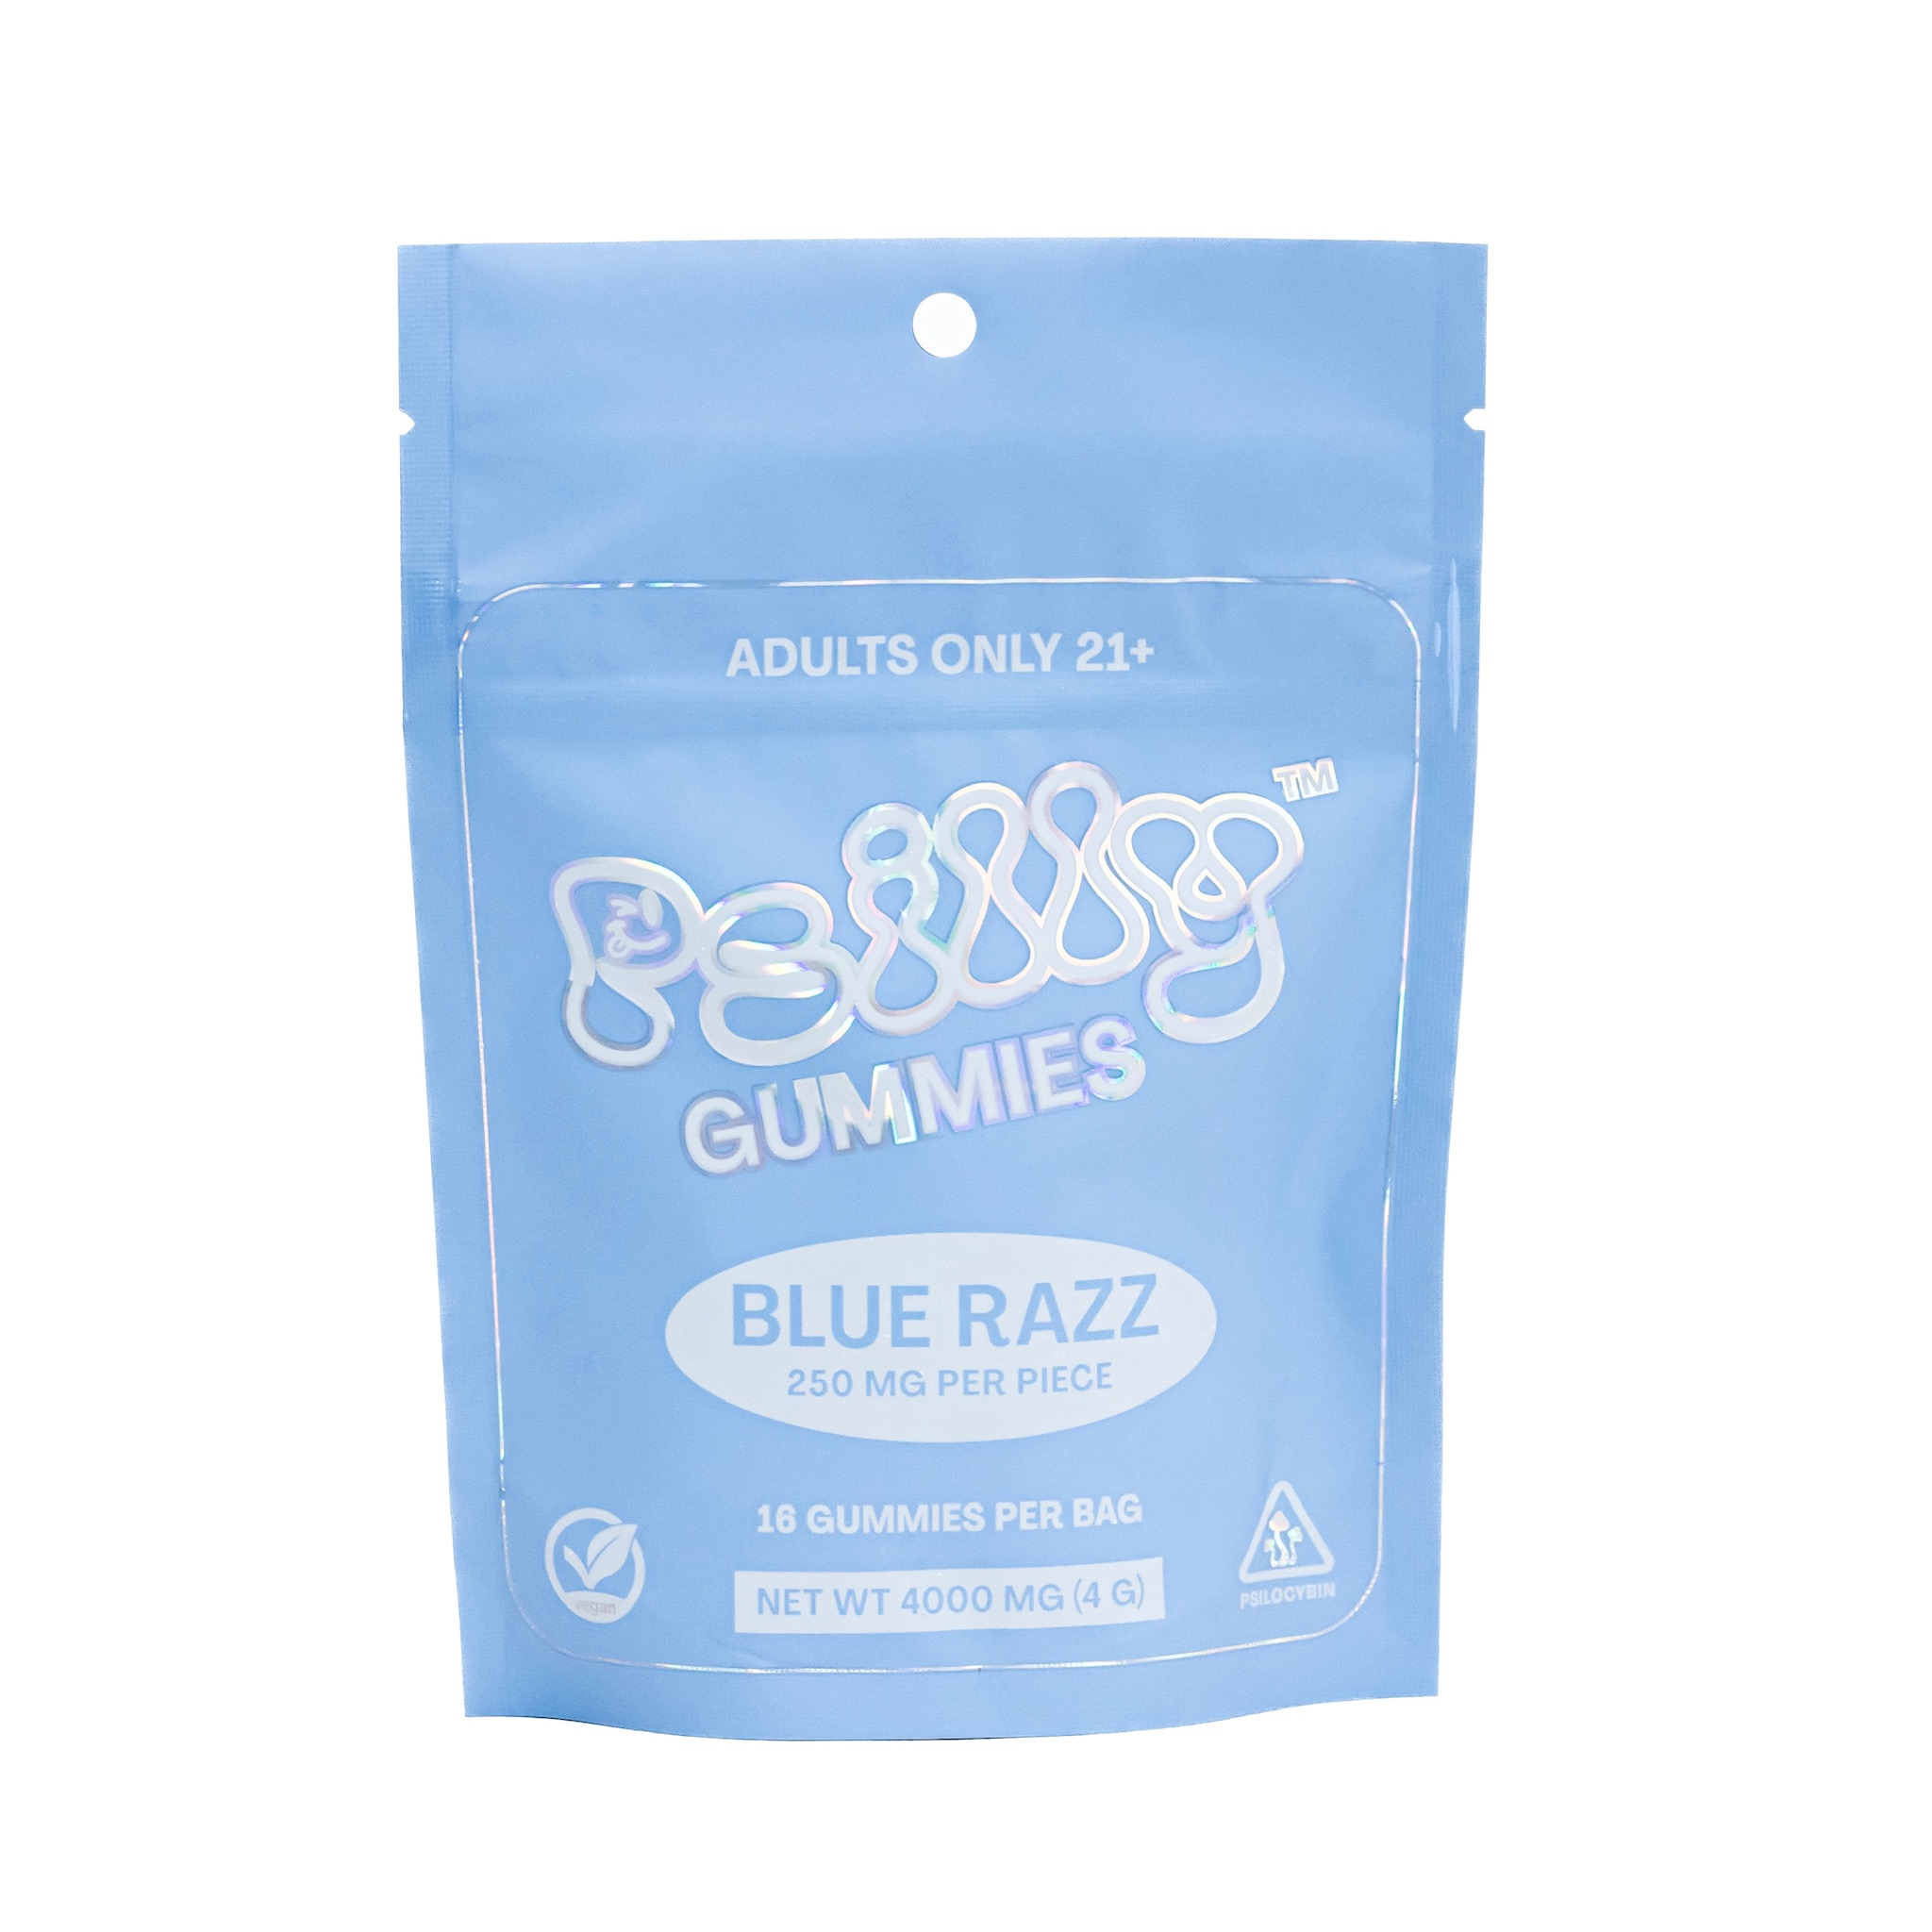 Psilly Mushroom Gummies Bag 4g Blue Razz